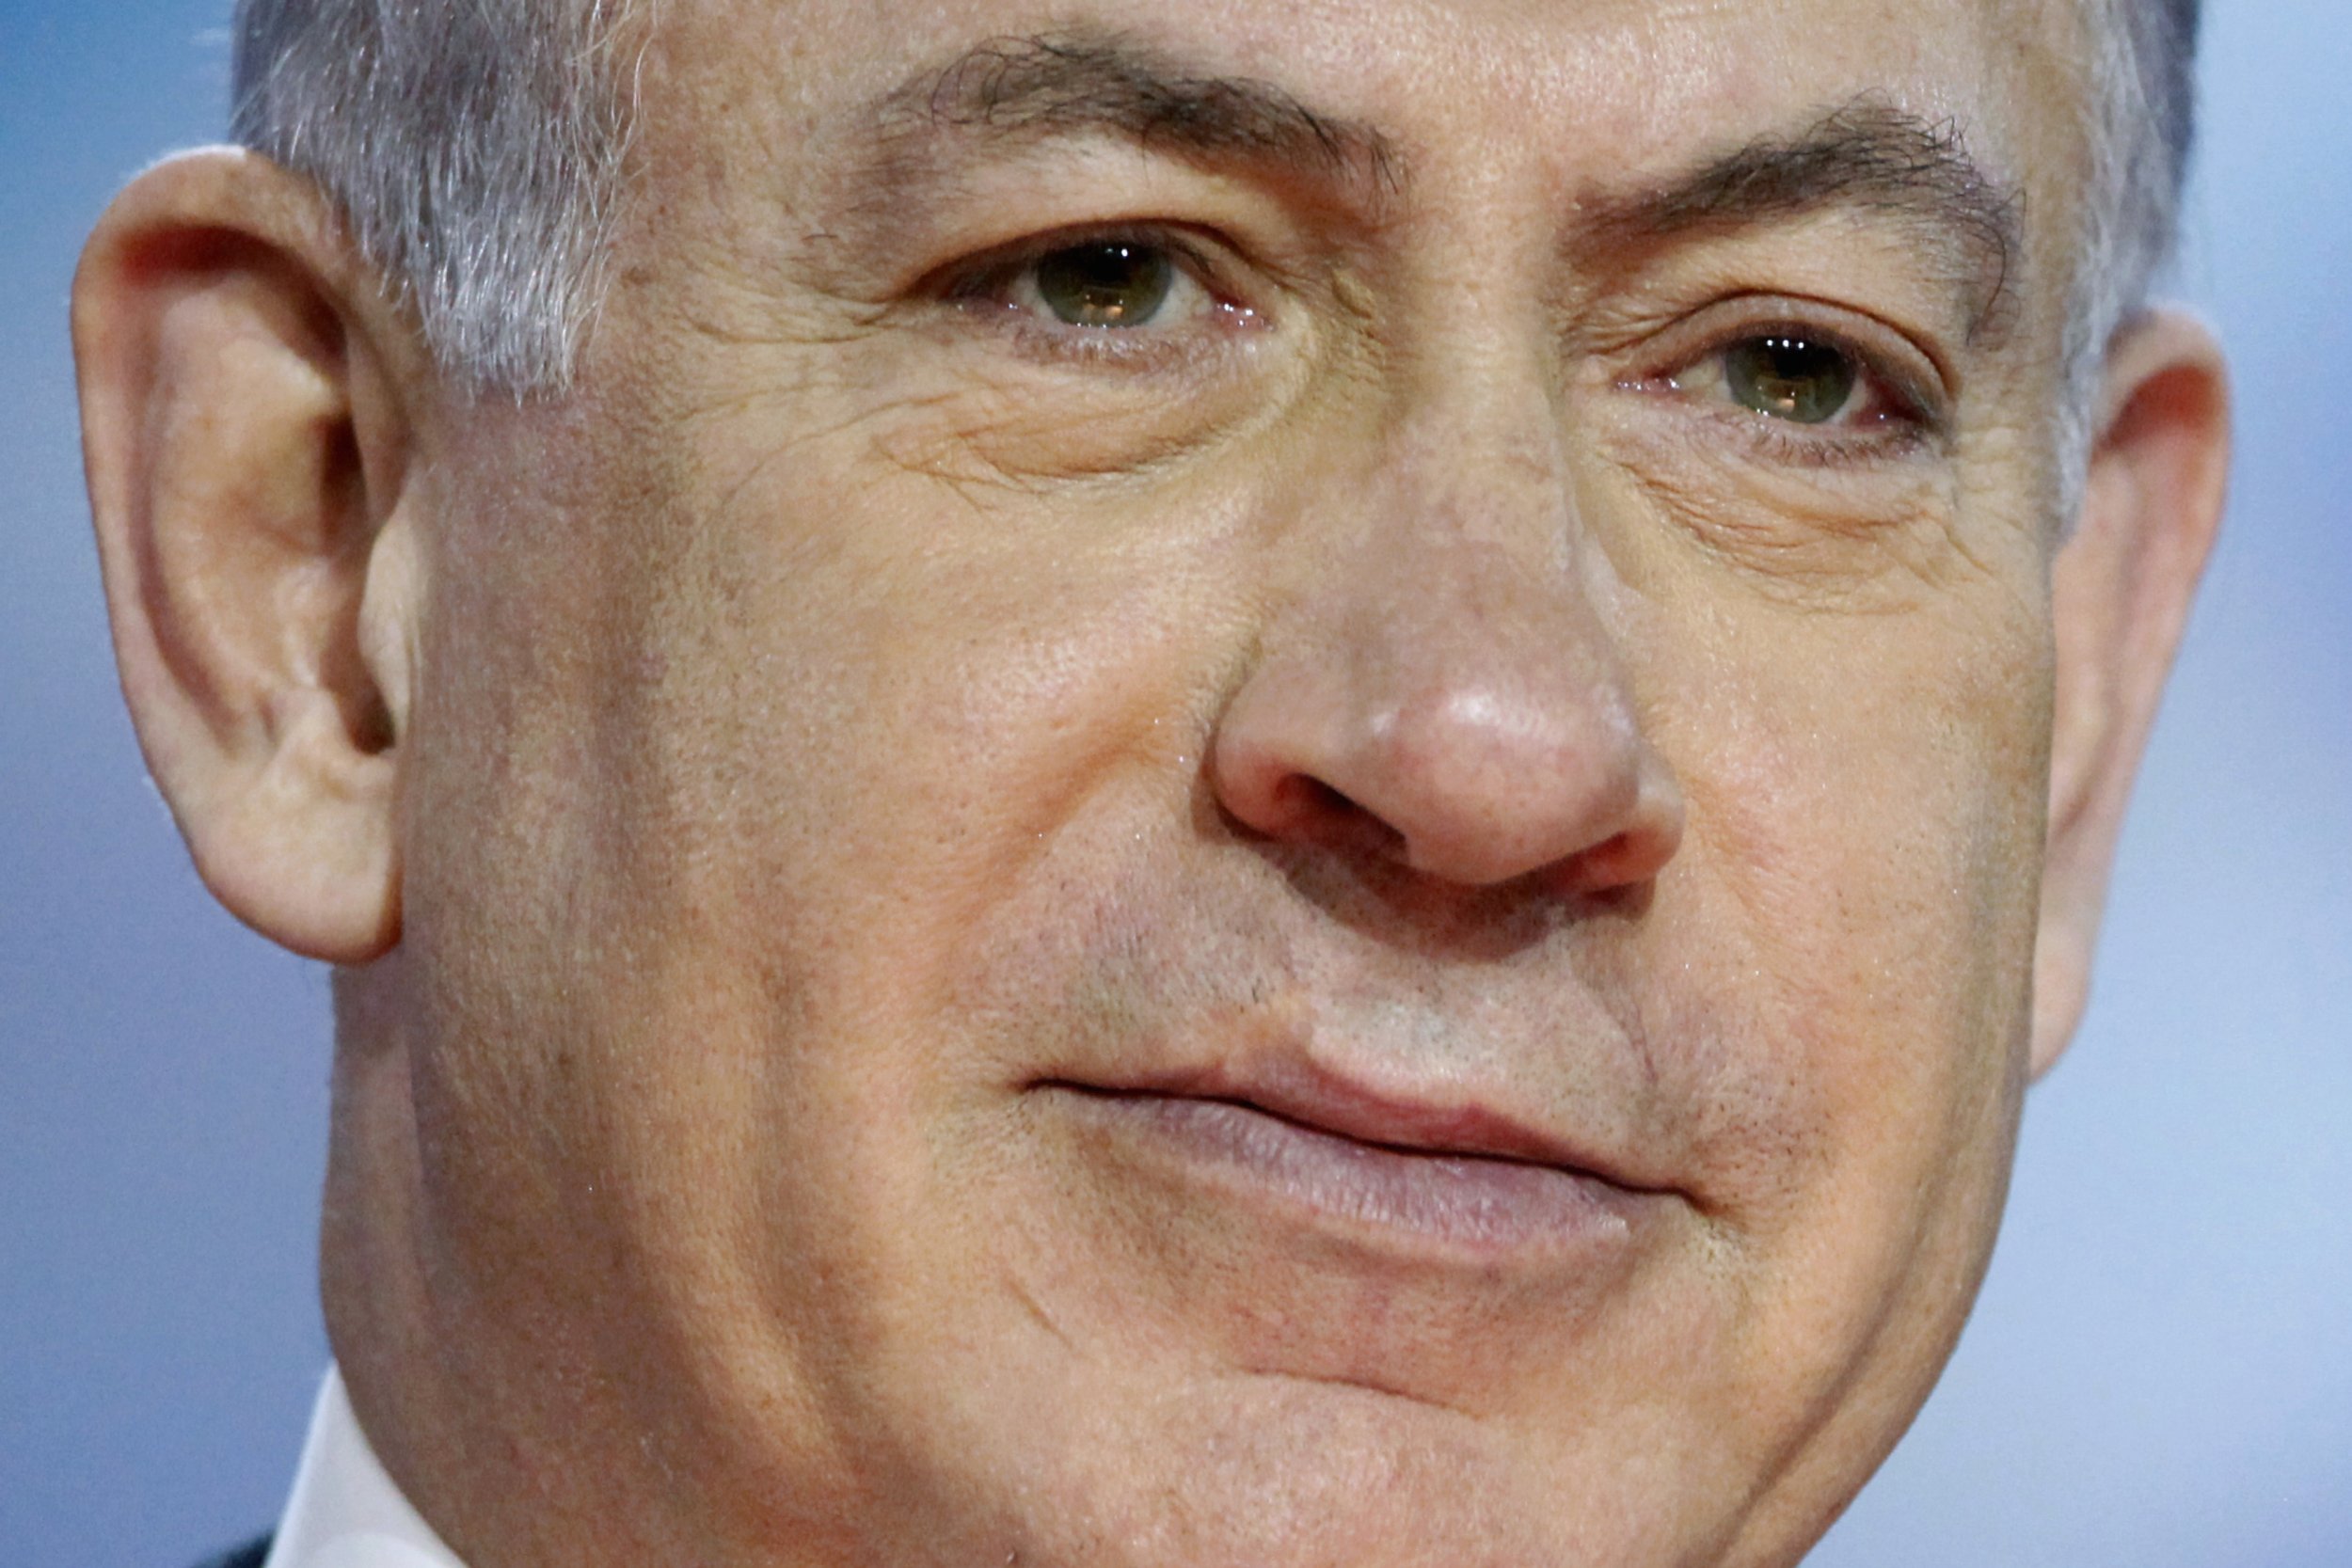 Netanyahu Speech Congress Live Stream: Watch Video Of Israeli Prime